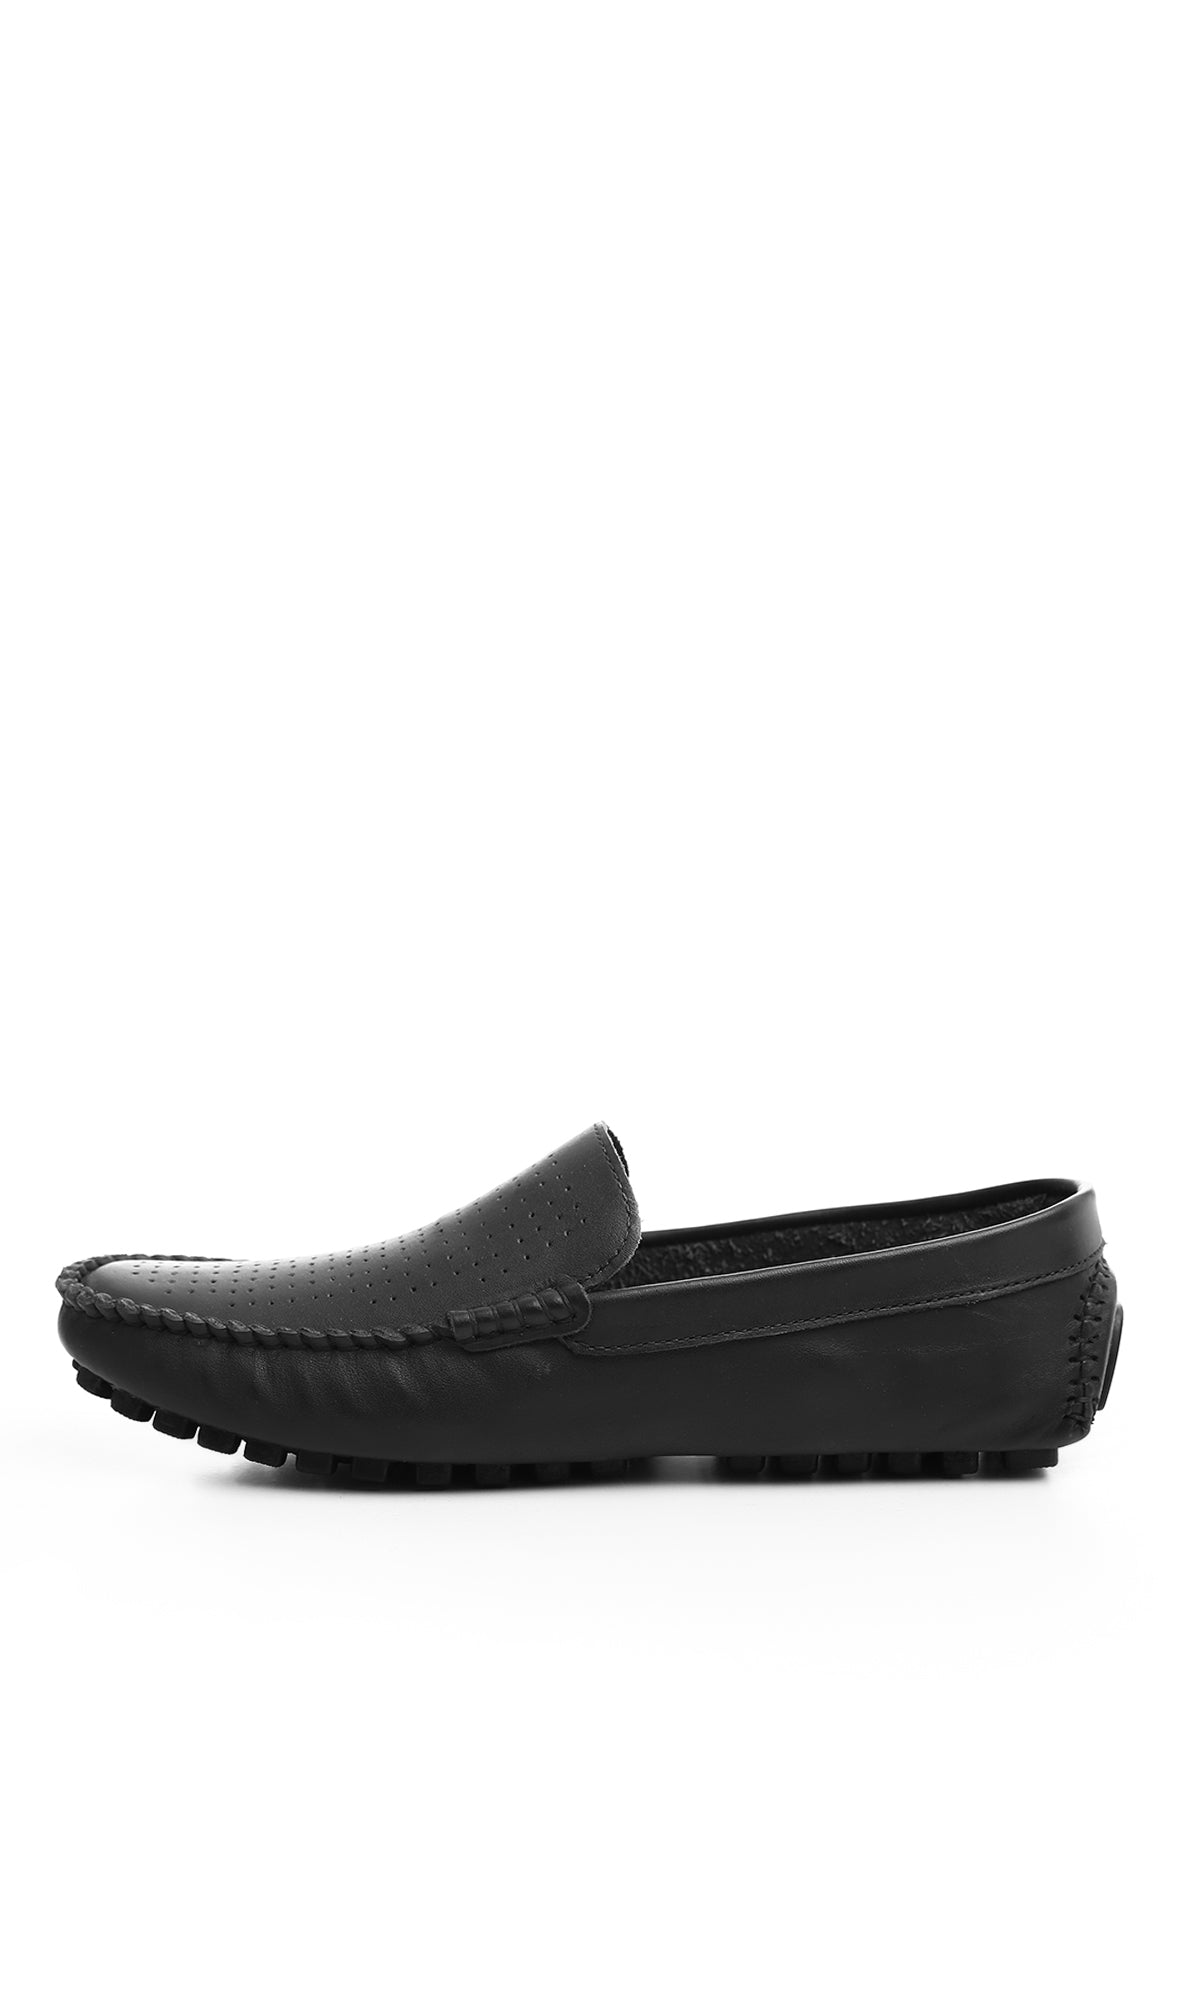 O174706 Slip On Leather Black Loafers